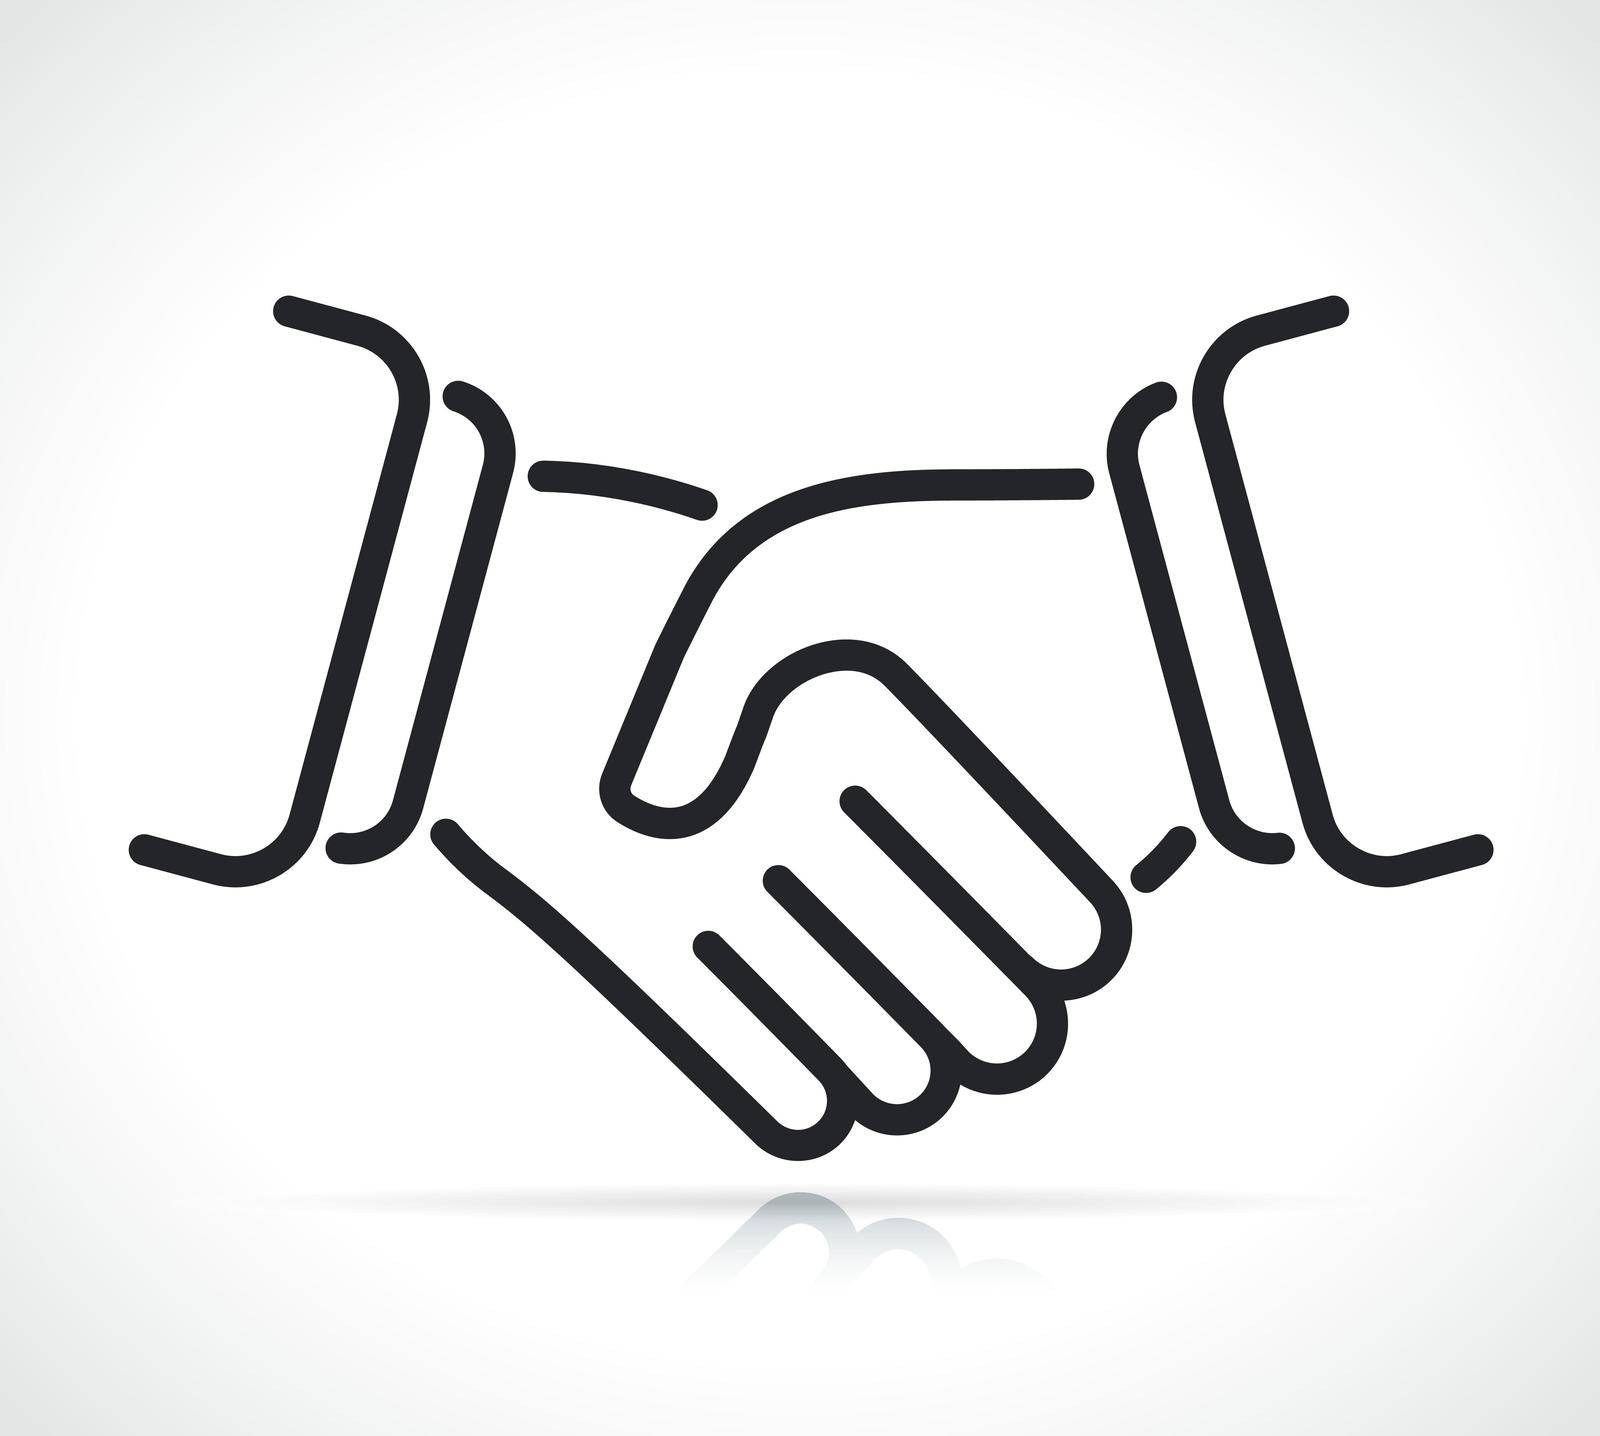 handshake or partnership line icon by Francois_Poirier